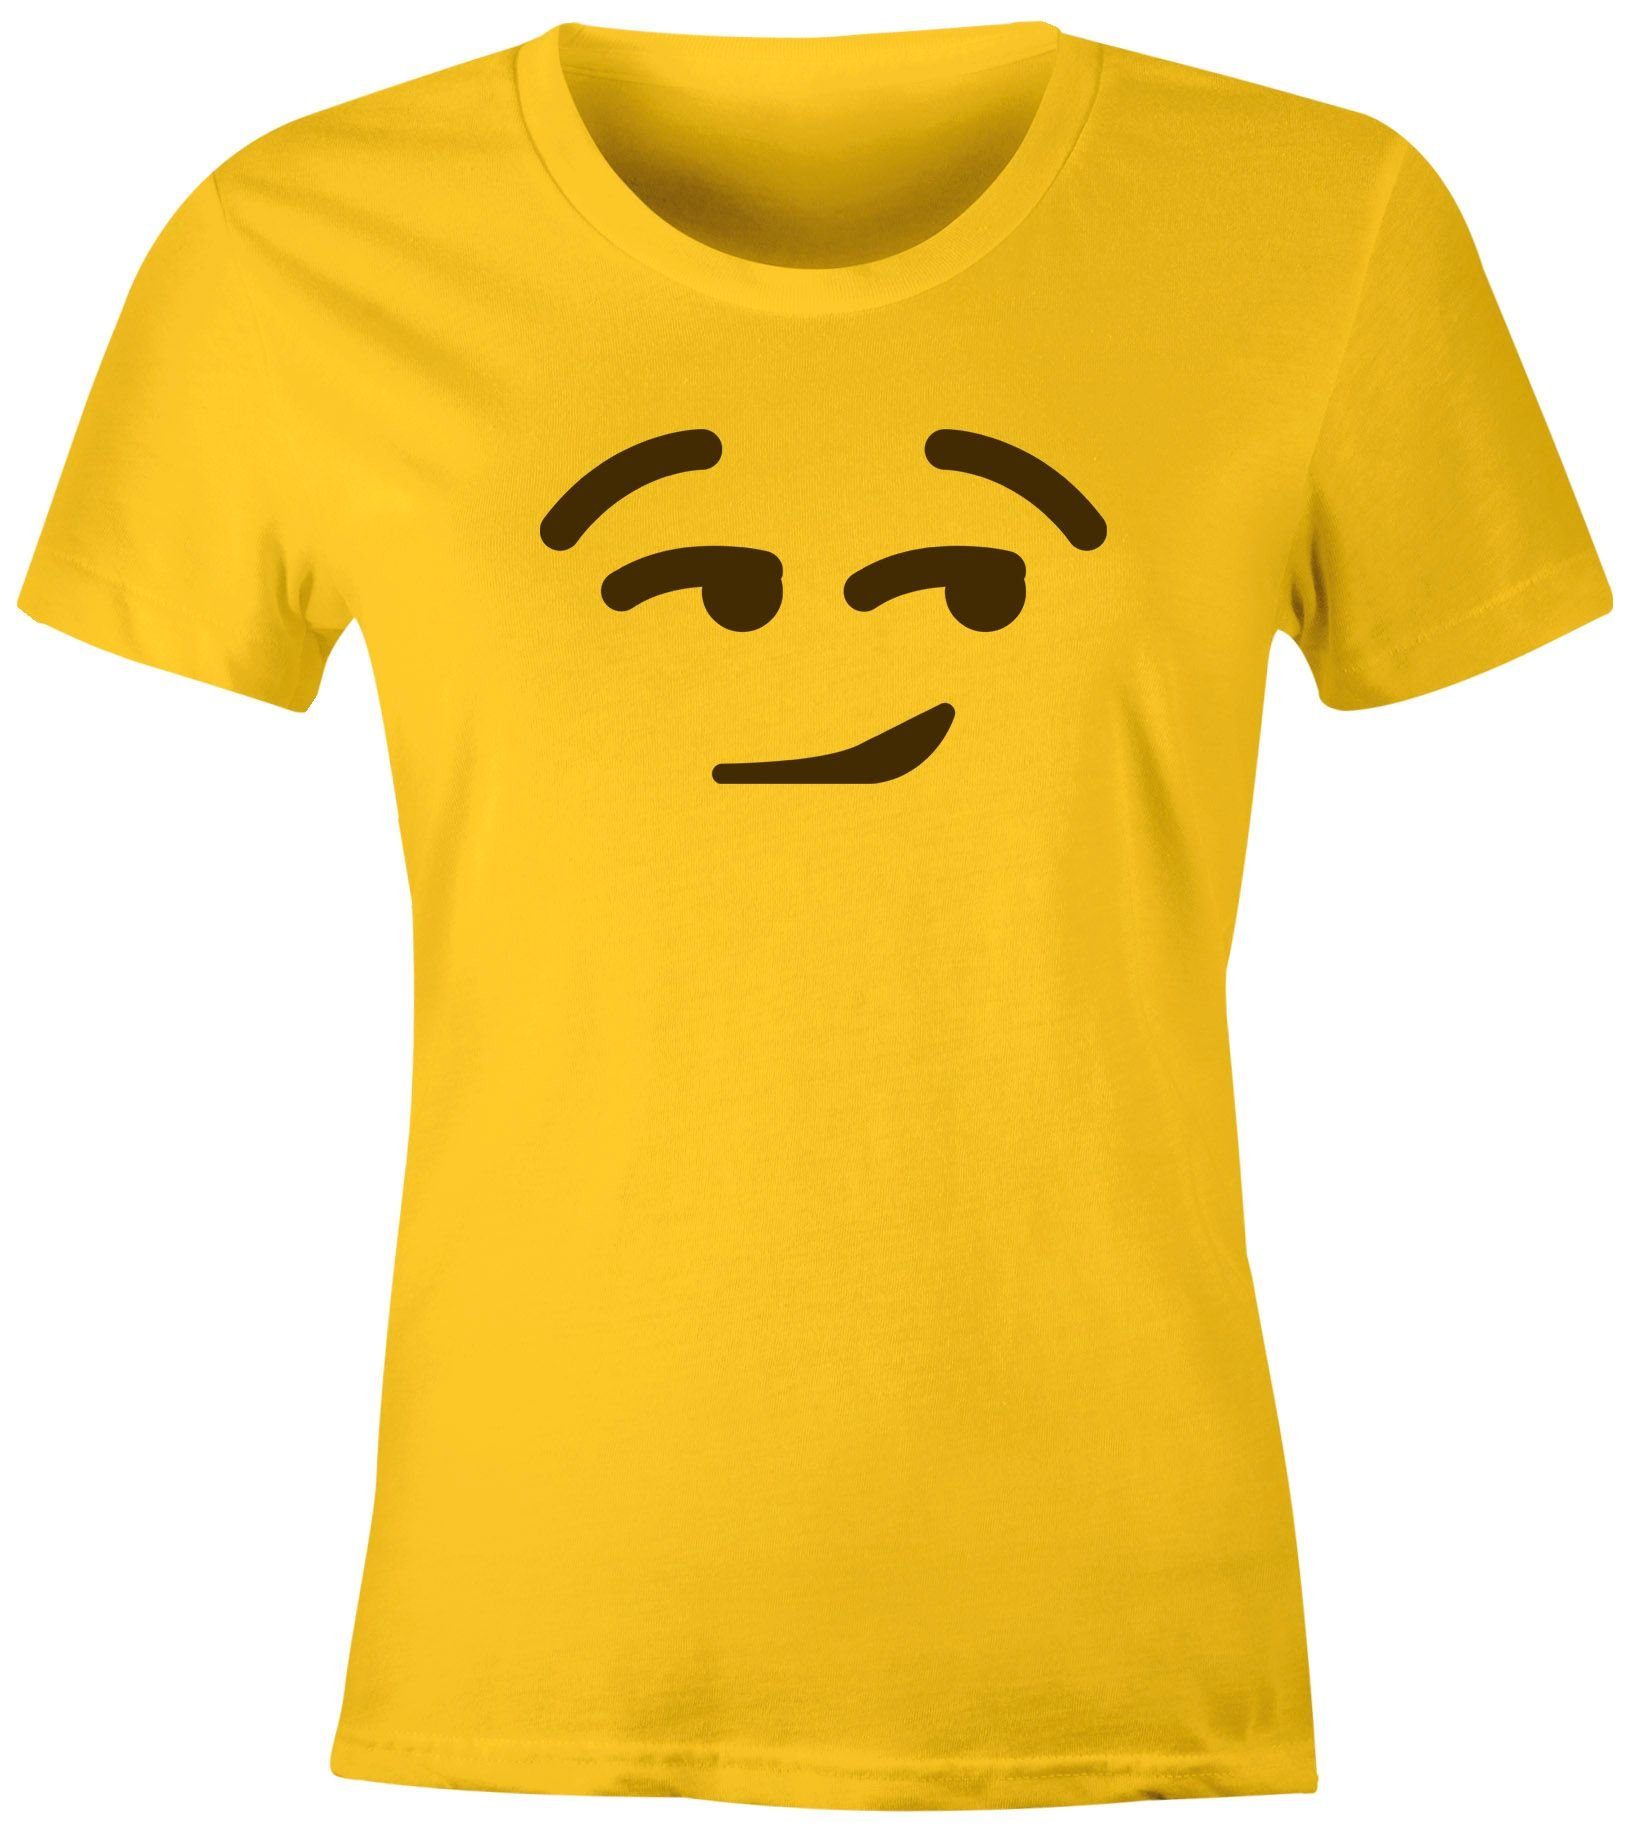 MoonWorks Print-Shirt Gruppenkostüm Emoticon Junggesellenabschied JGA Smirk Fasching lustig Karneval mit Fun-Shirt Damen Moonworks® T-Shirt Print gelb